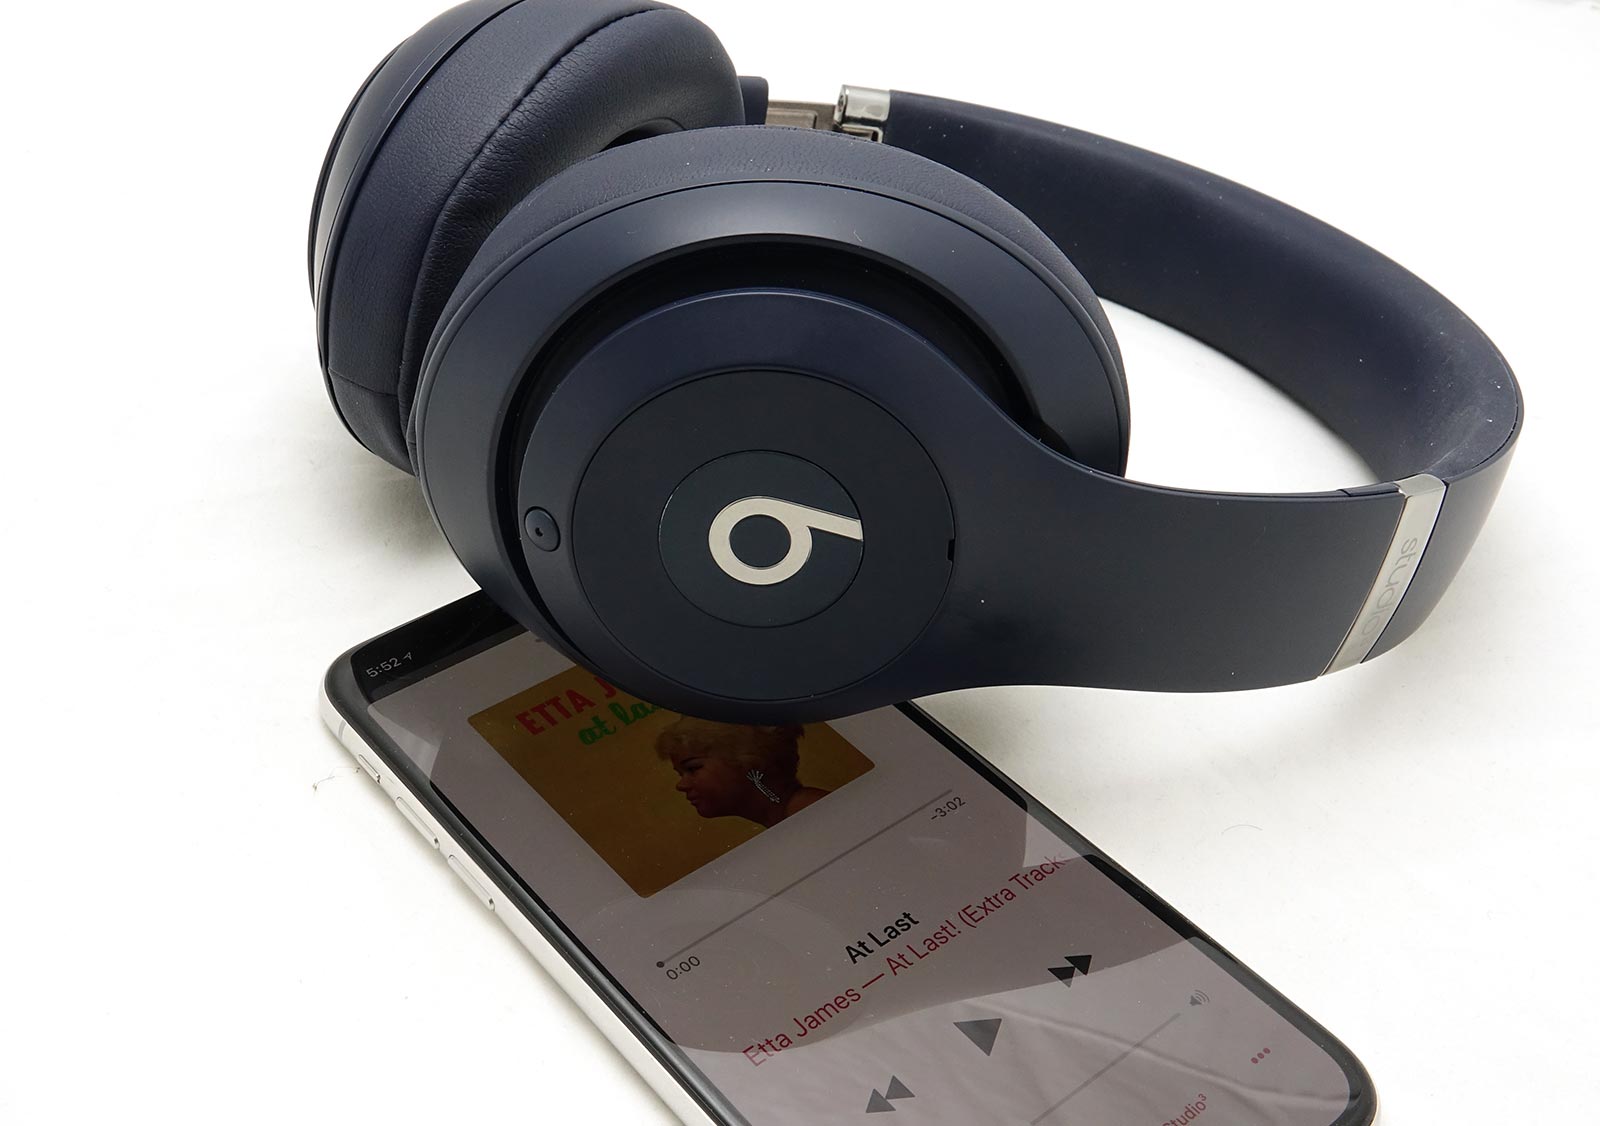 Review: Beats Studio 3 Wireless noise-cancellation headphones – Pickr